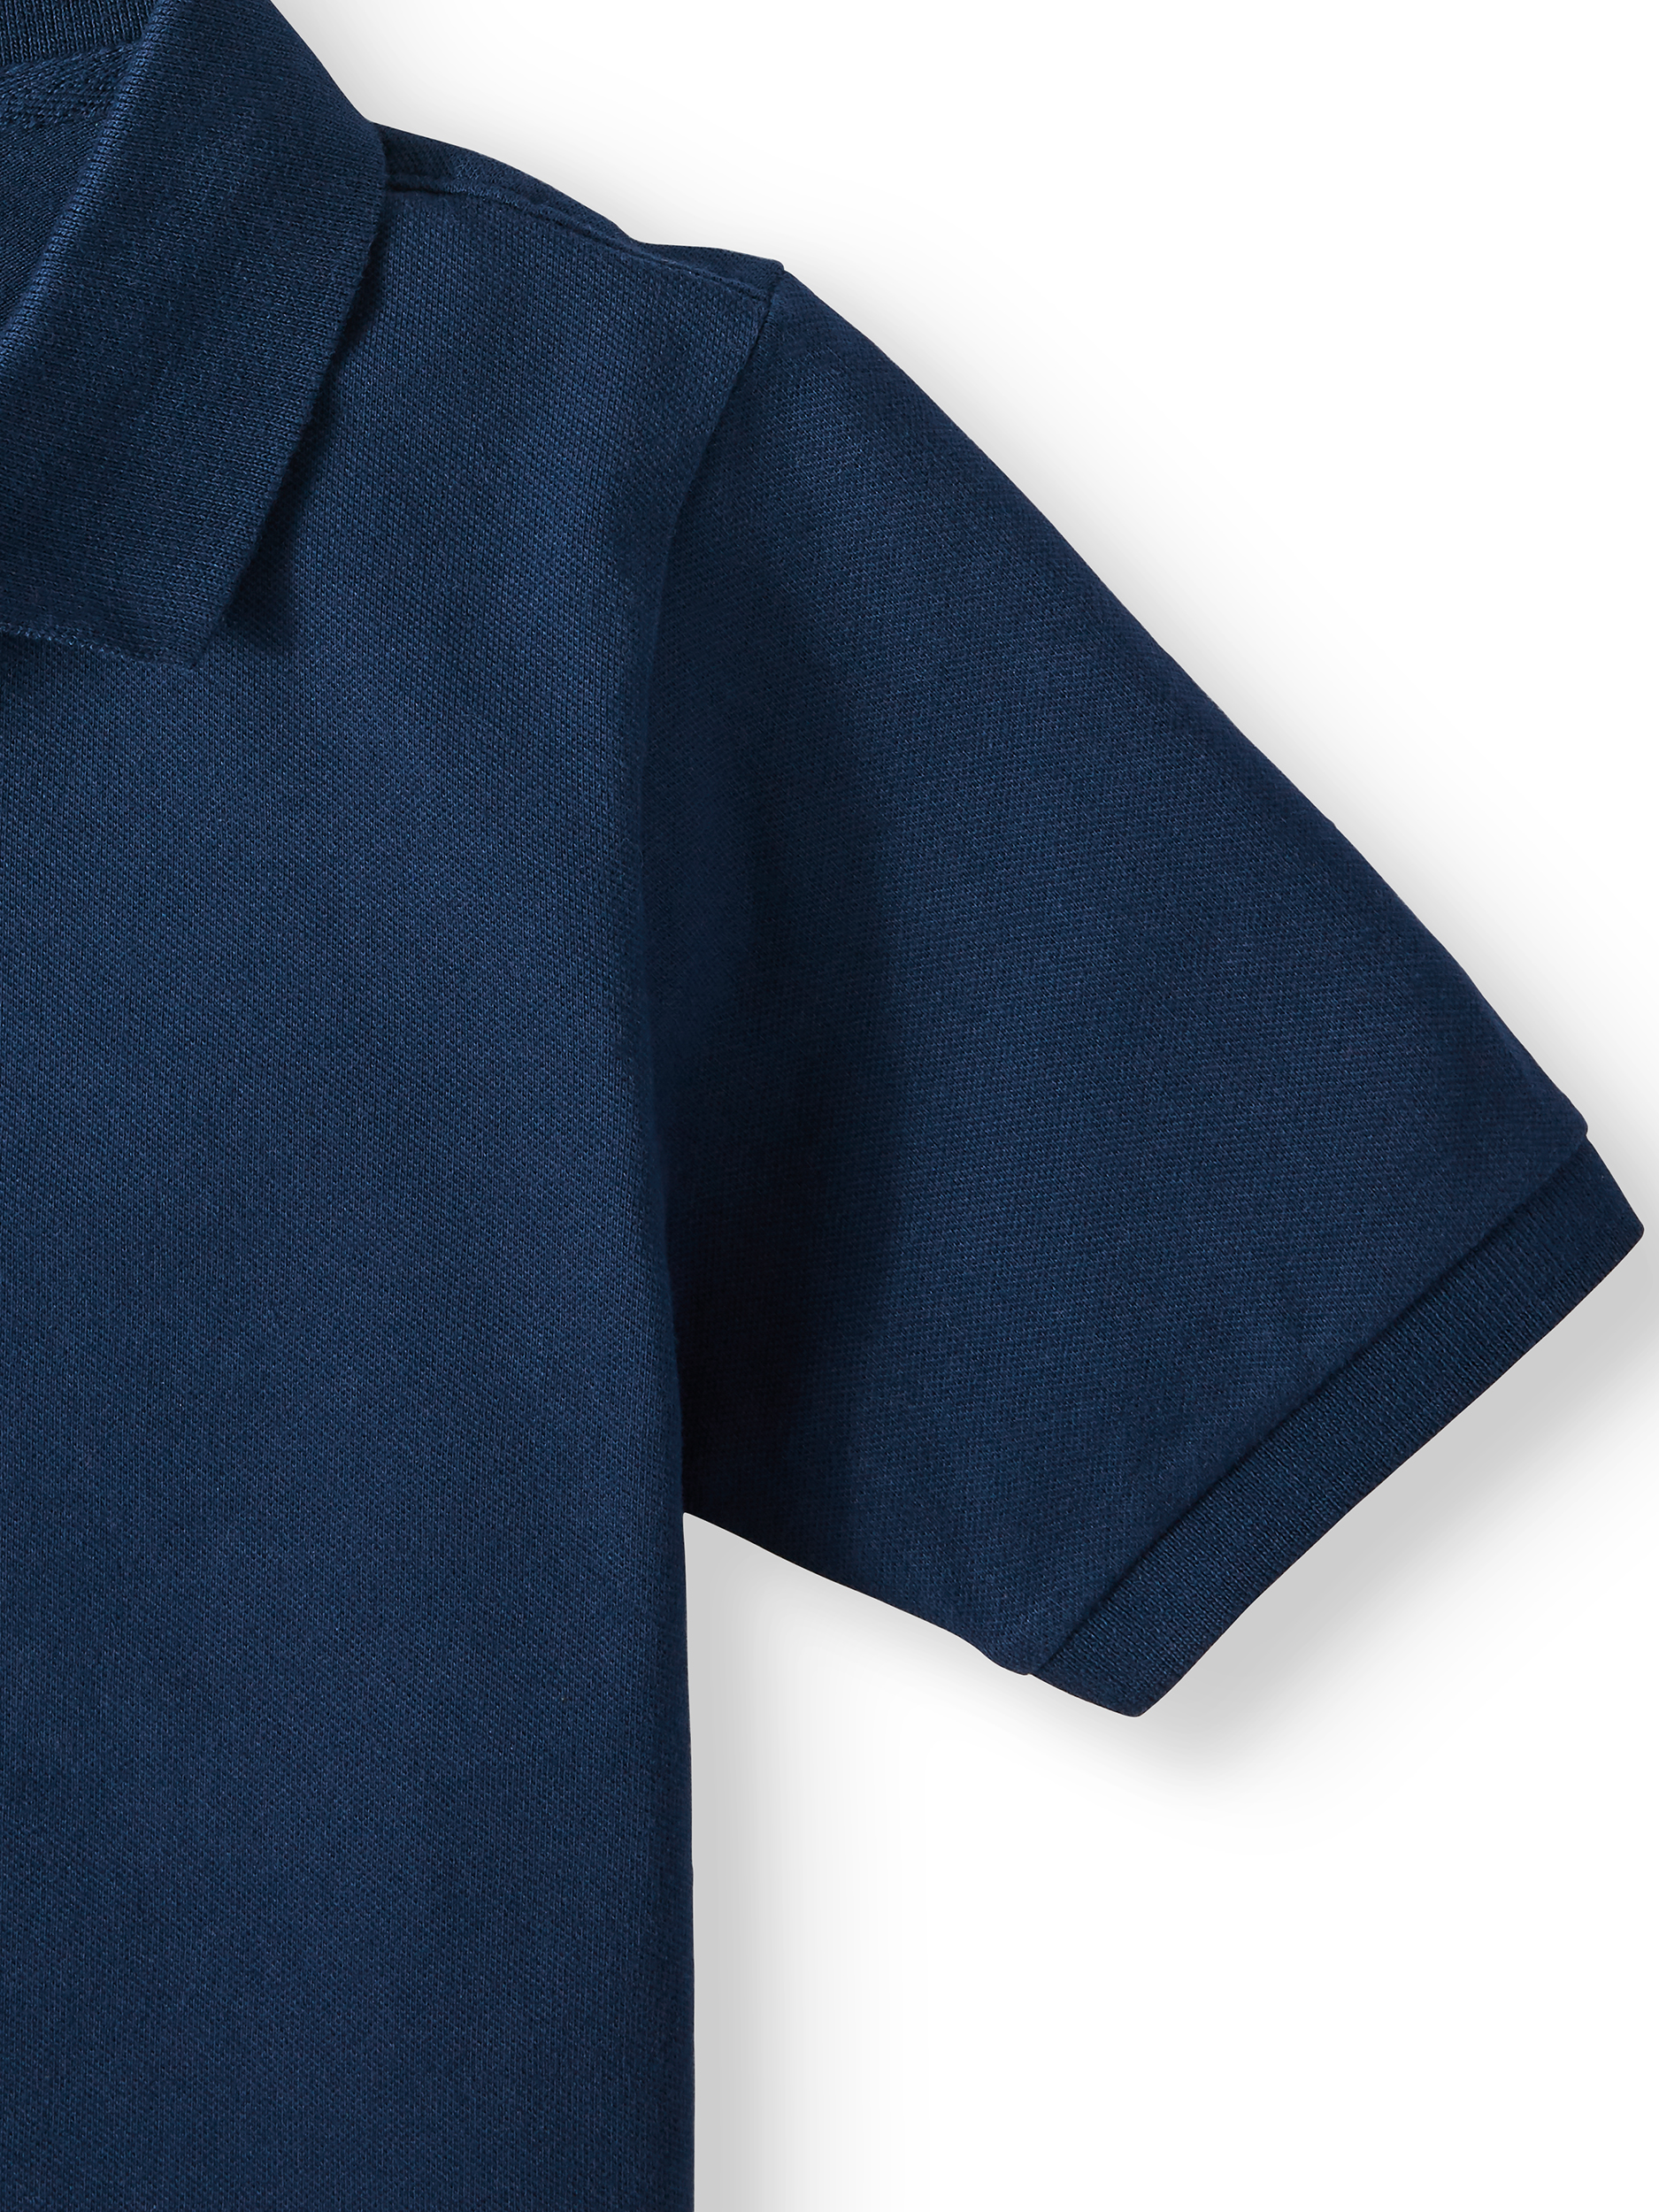 Wonder Nation Boys School Uniform Short Sleeve Pique Polo Shirts, 4-Pack Value Bundle, Sizes 4-18 - image 2 of 2